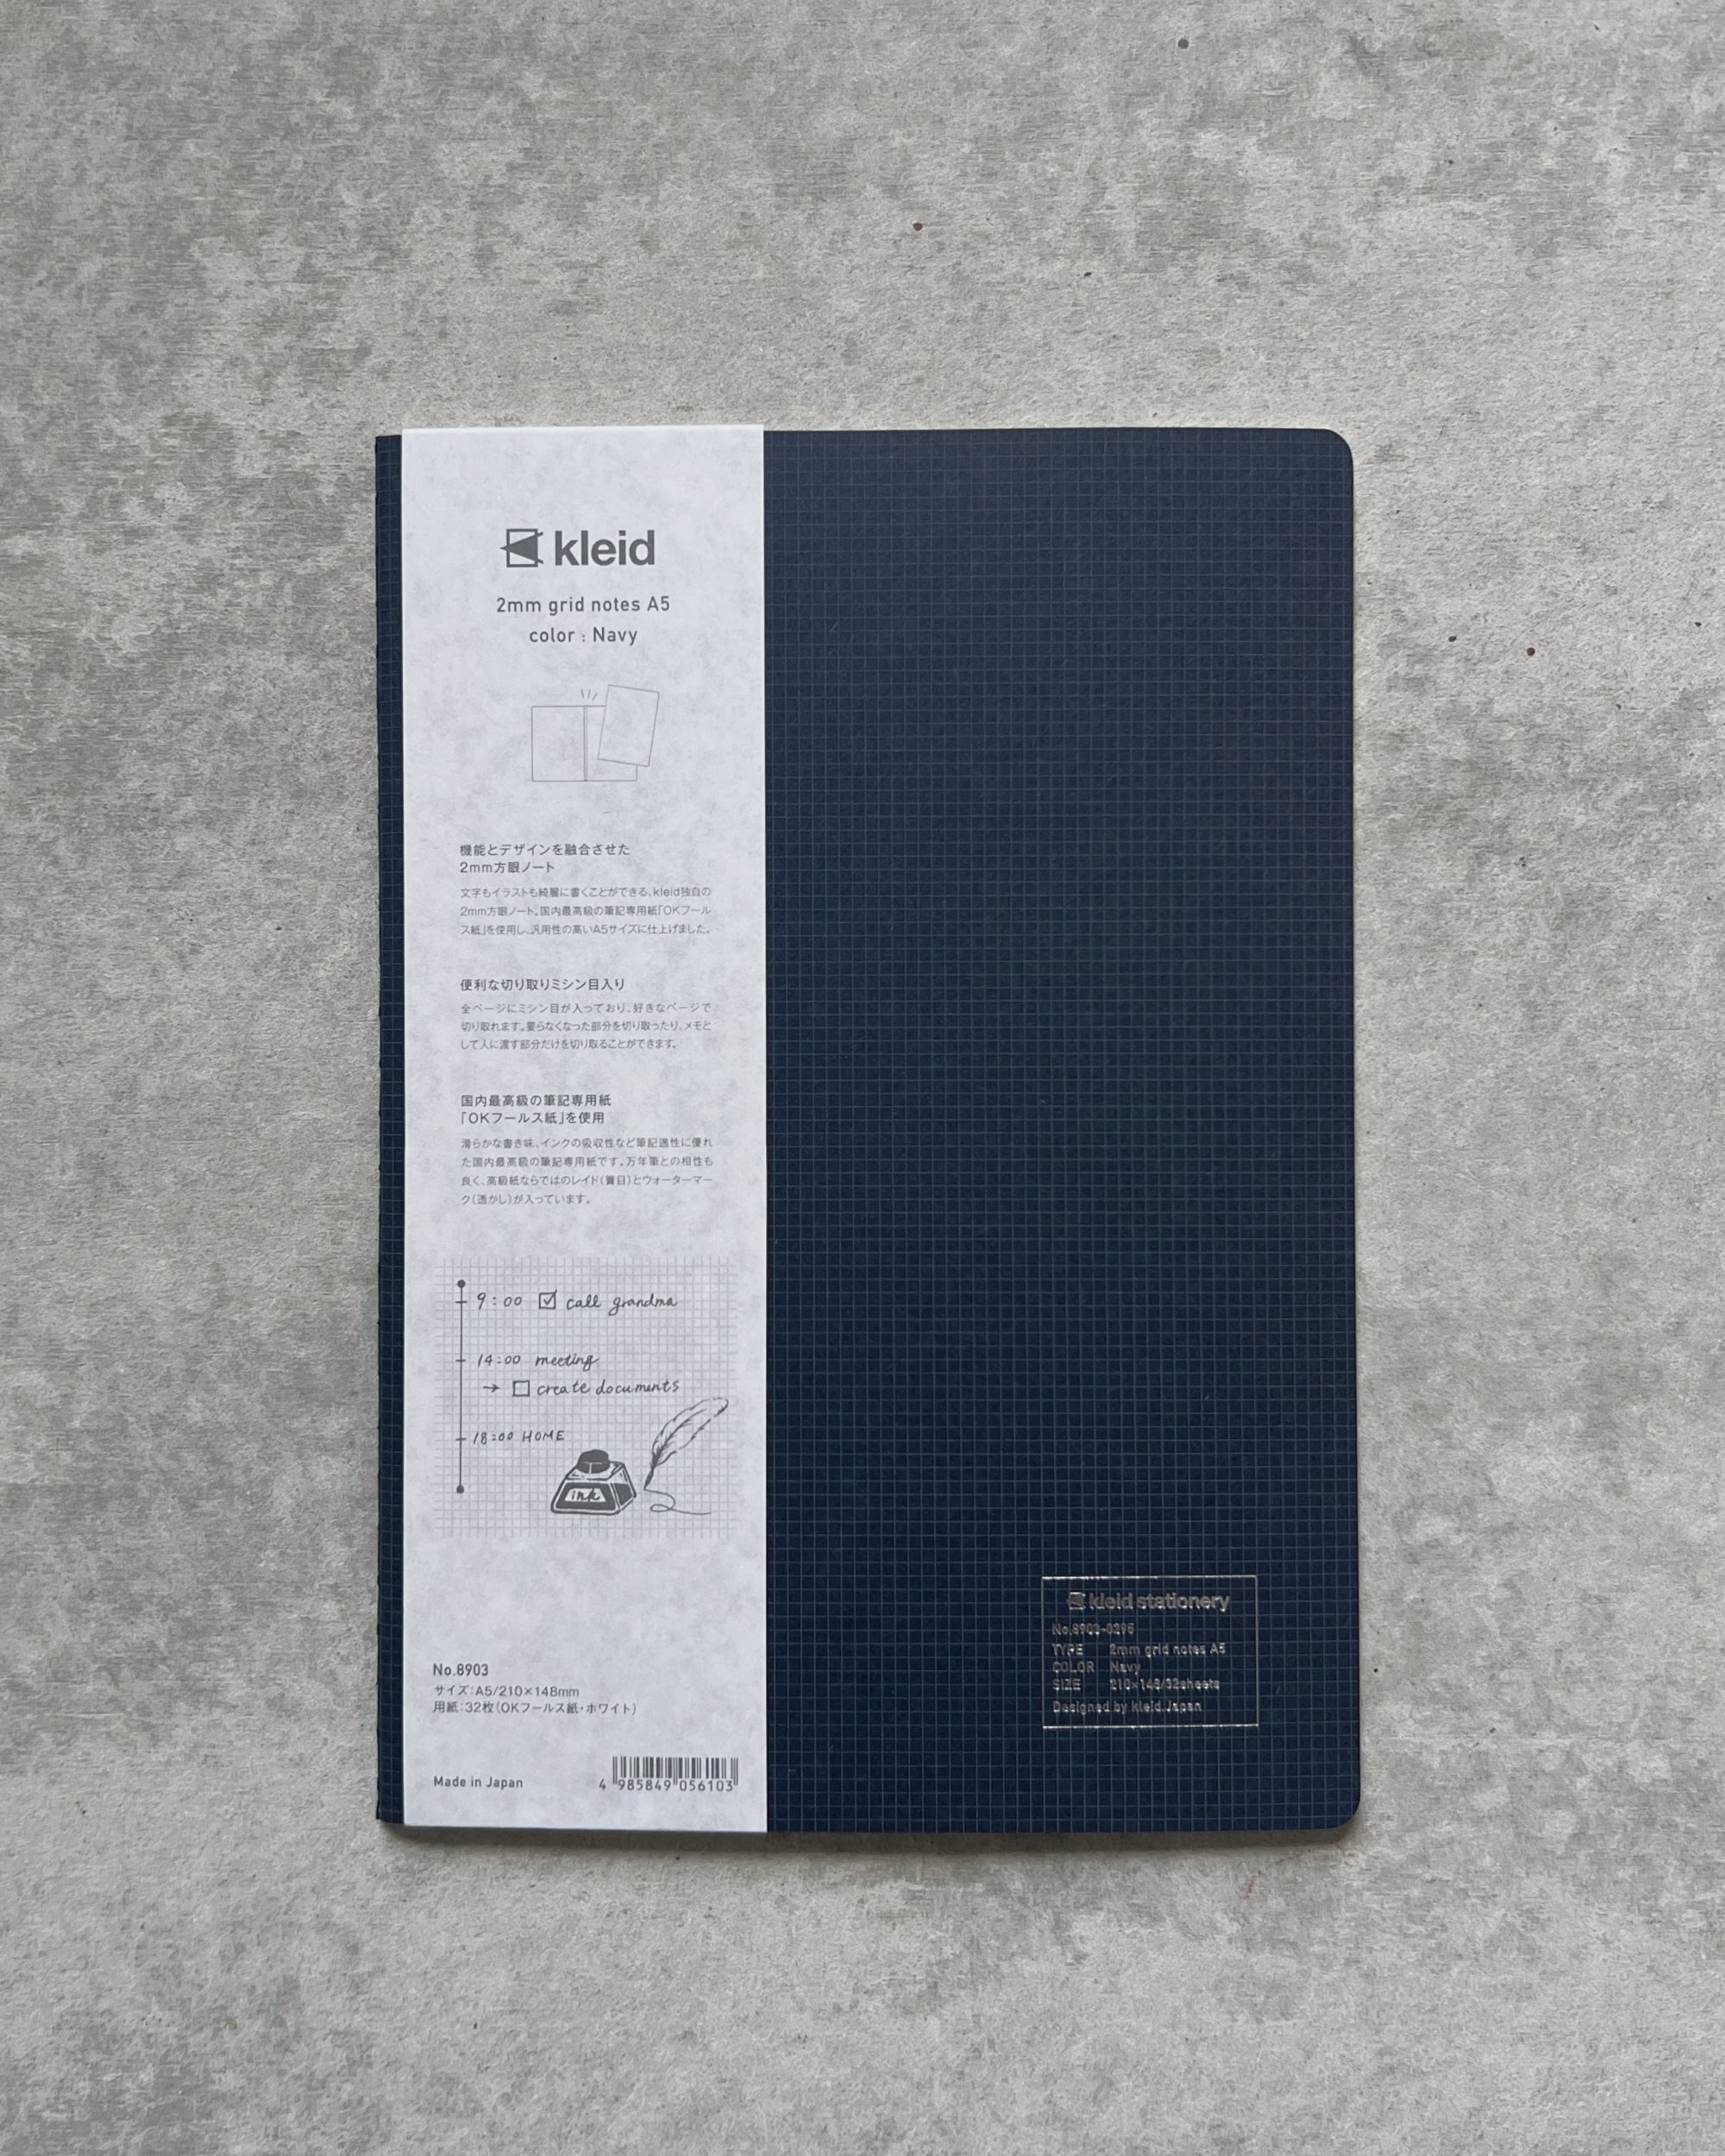 Kleid : A5 grid notebook